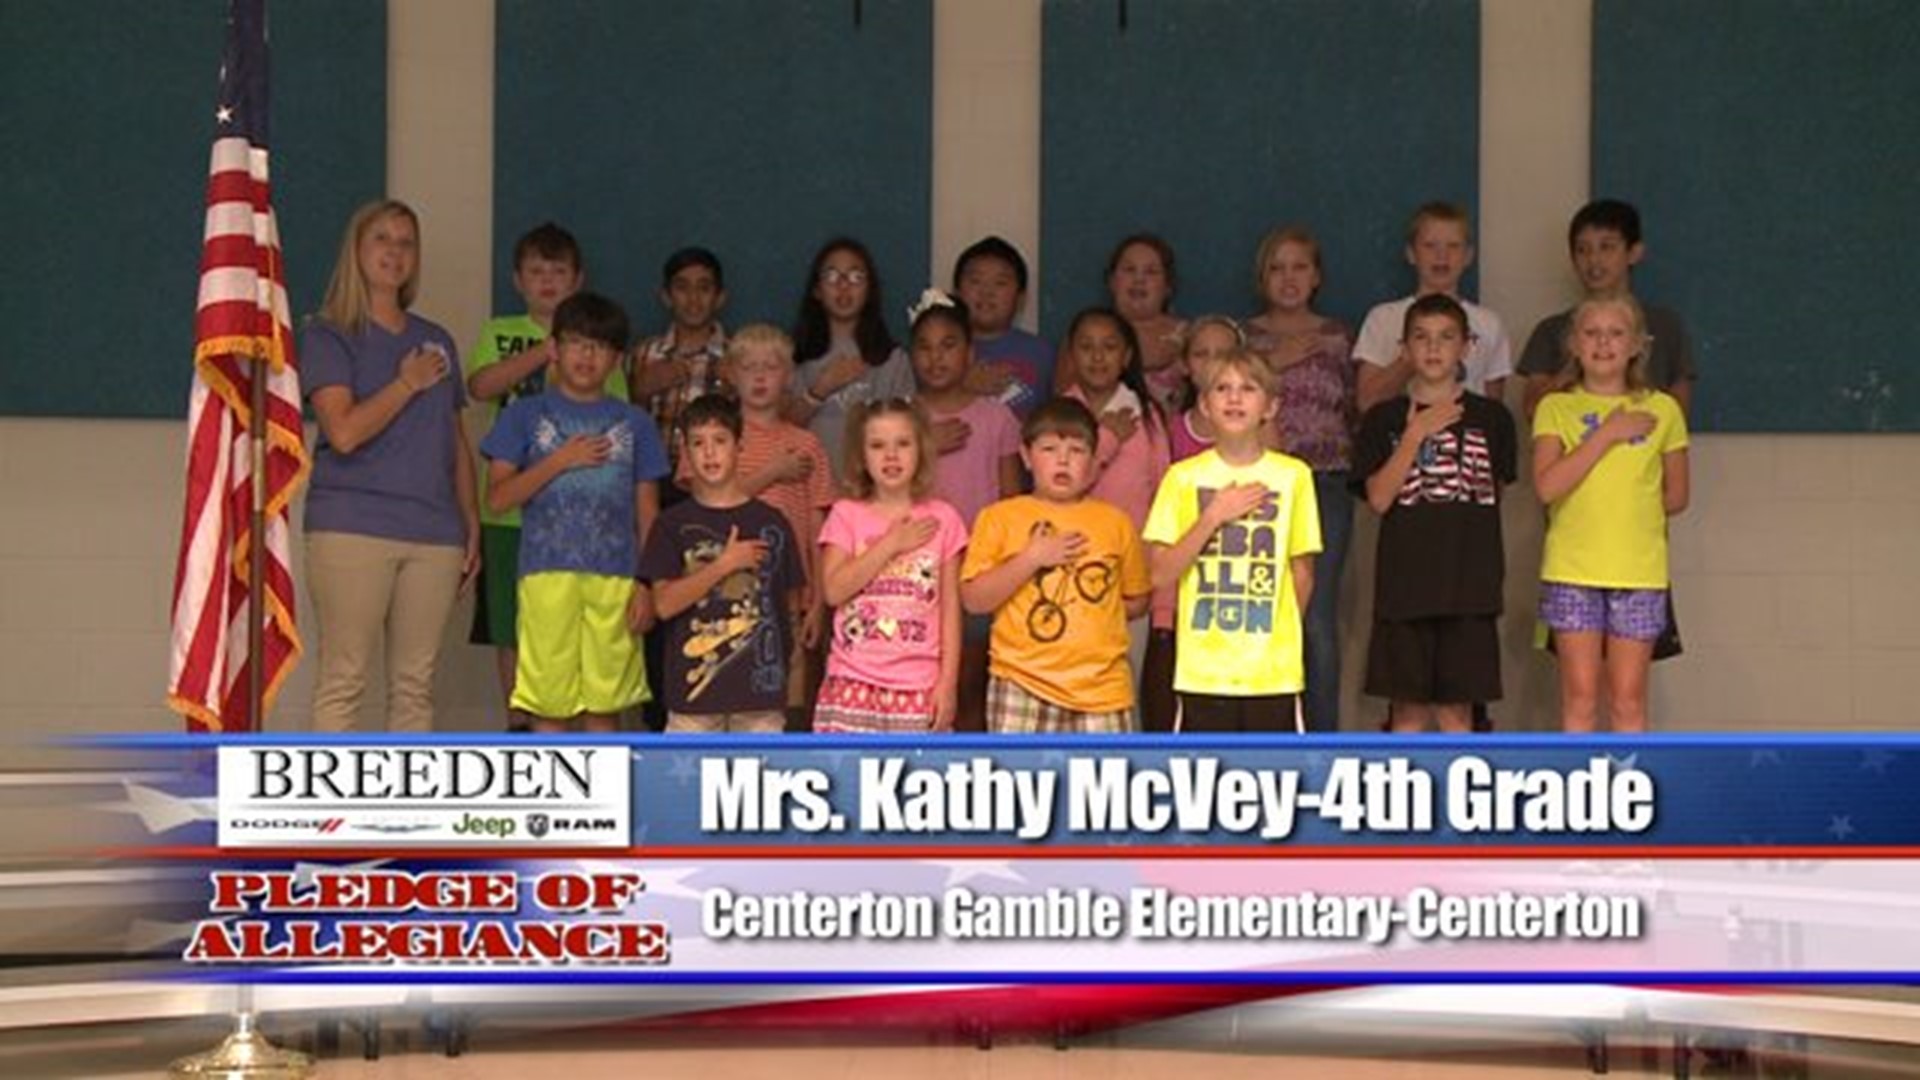 Centerton Gamble Elementary, Centerton - Mrs. Kathy McVey - 4th Grade